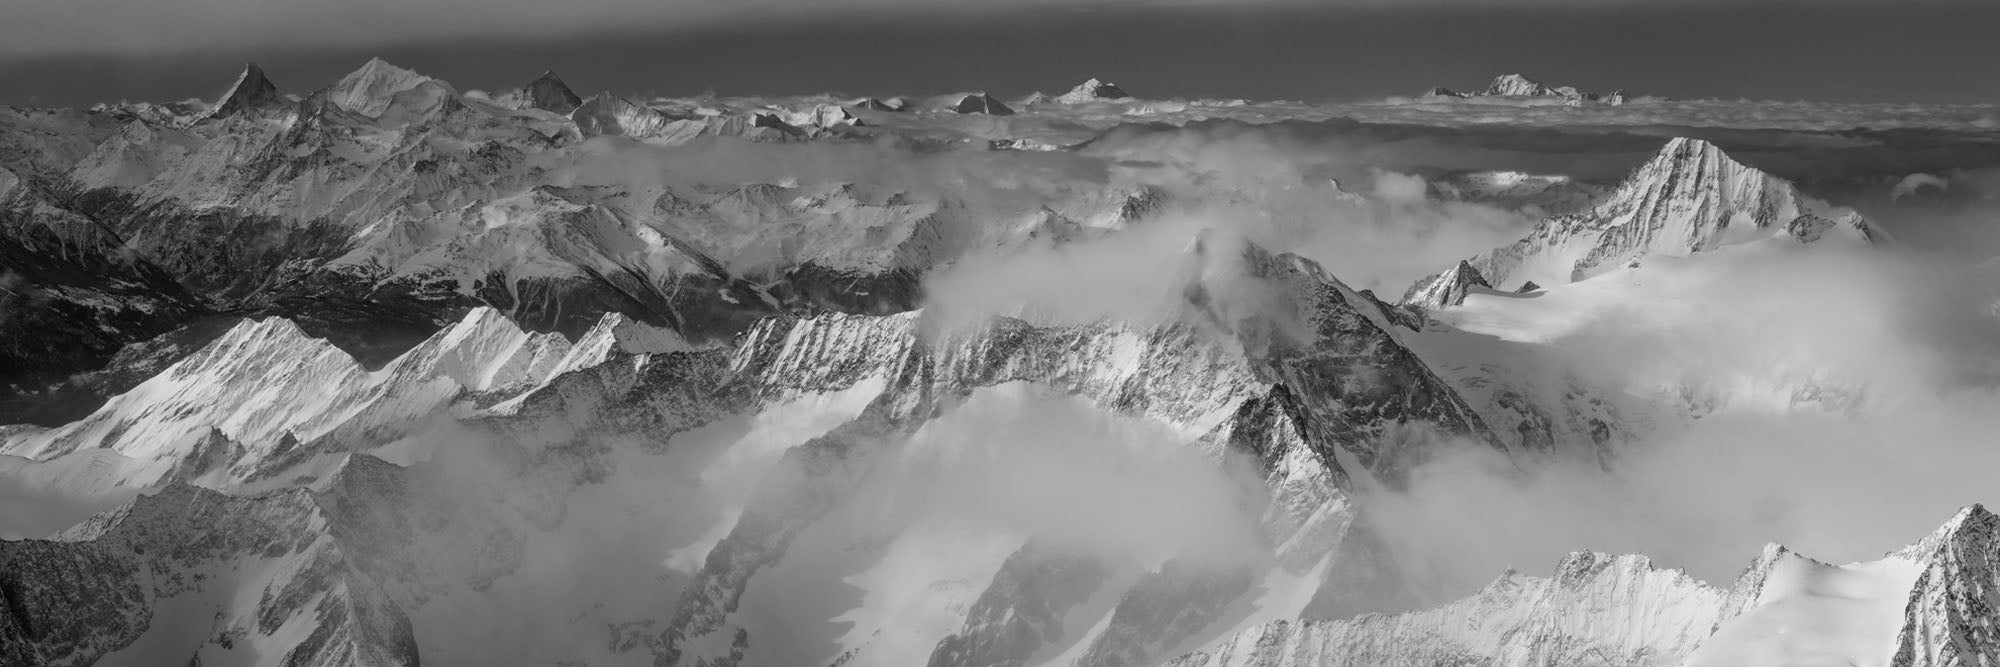 Les alpes vues des Bernese Alps, Switzerland No. 1